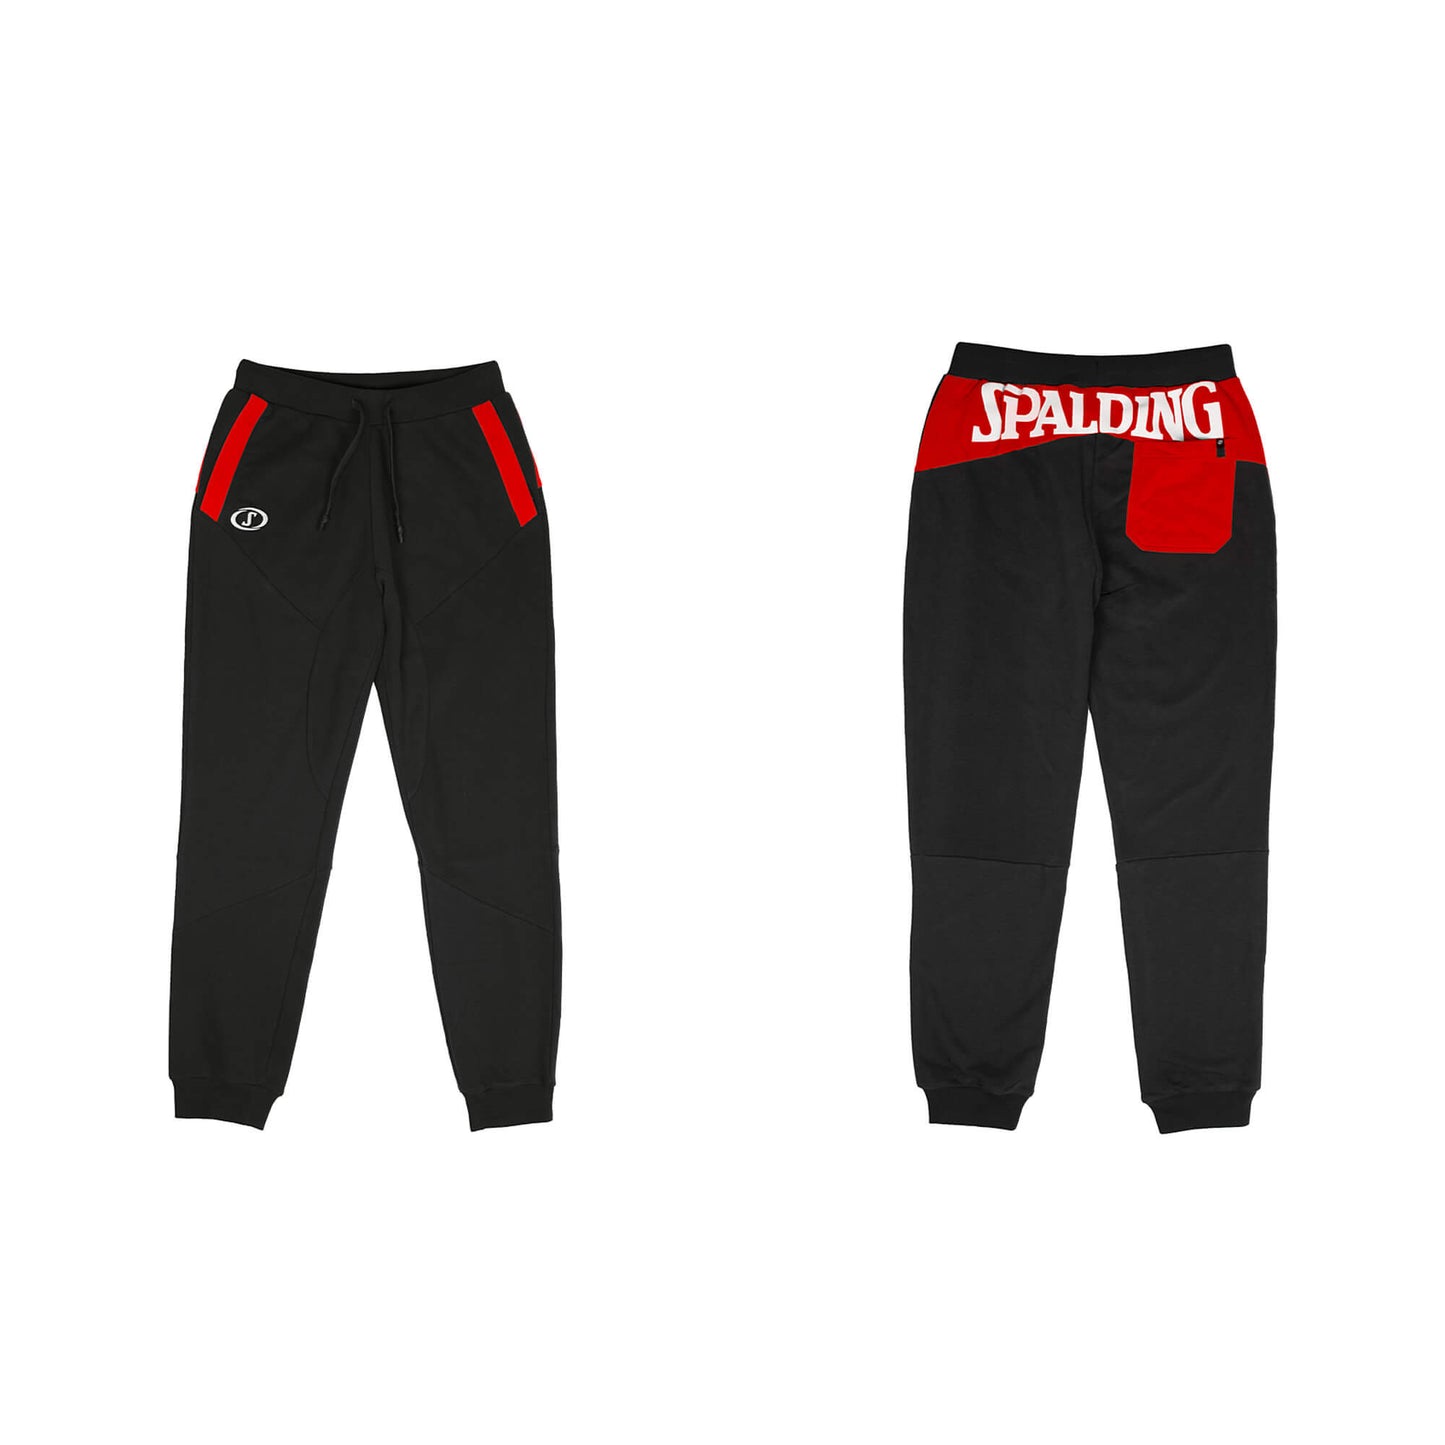 Spalding Funk Long Pants Red/Black